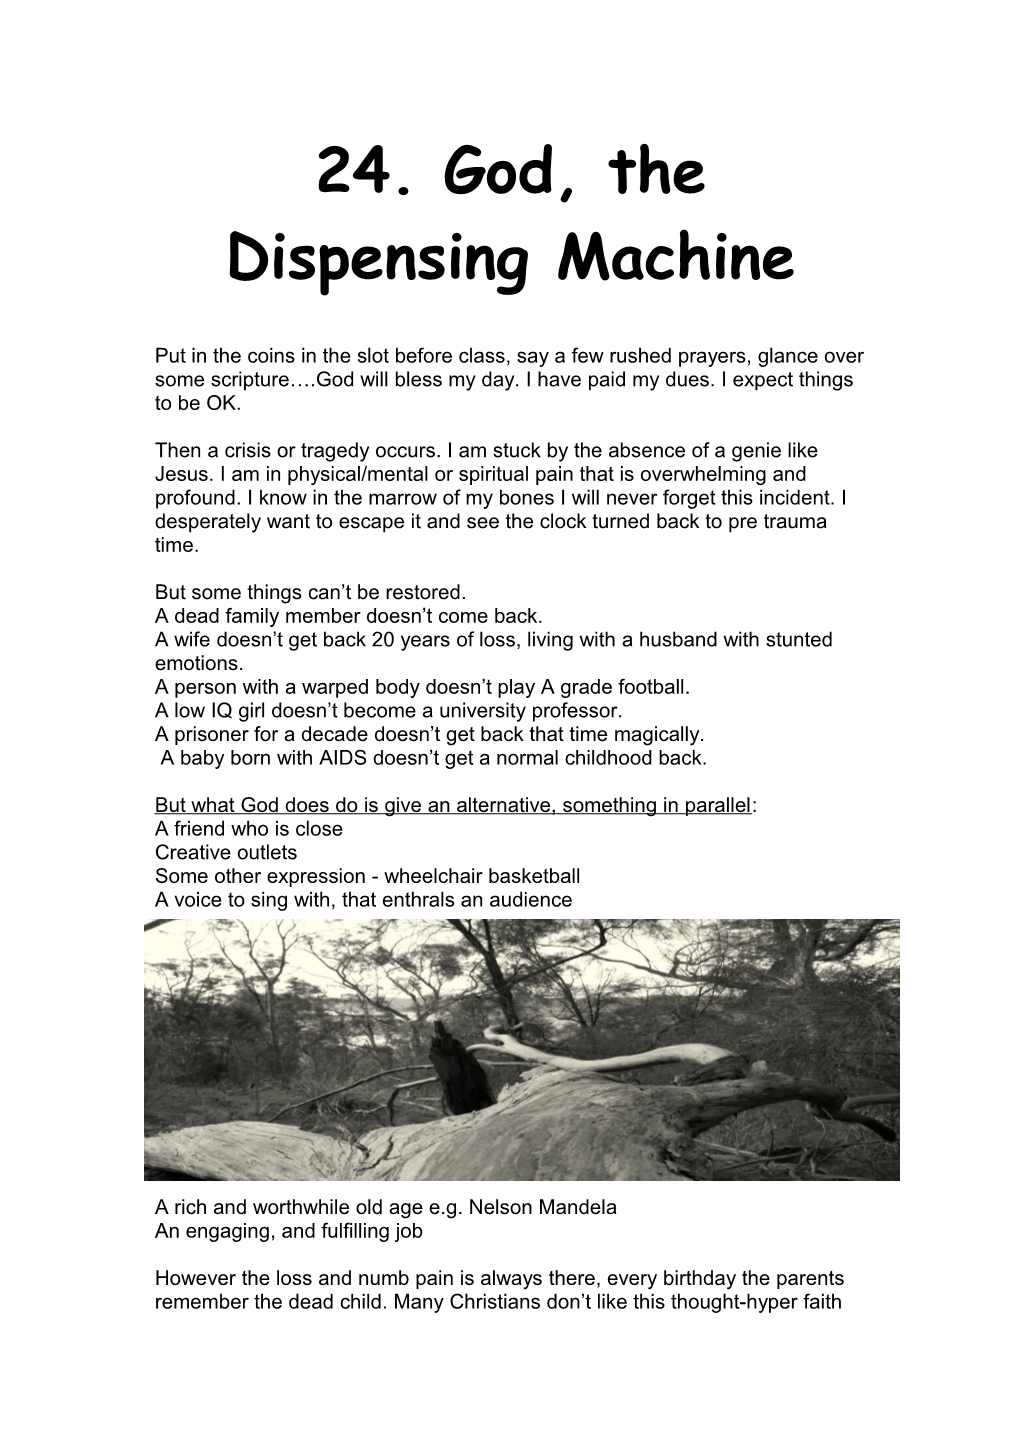 24. God, the Dispensing Machine